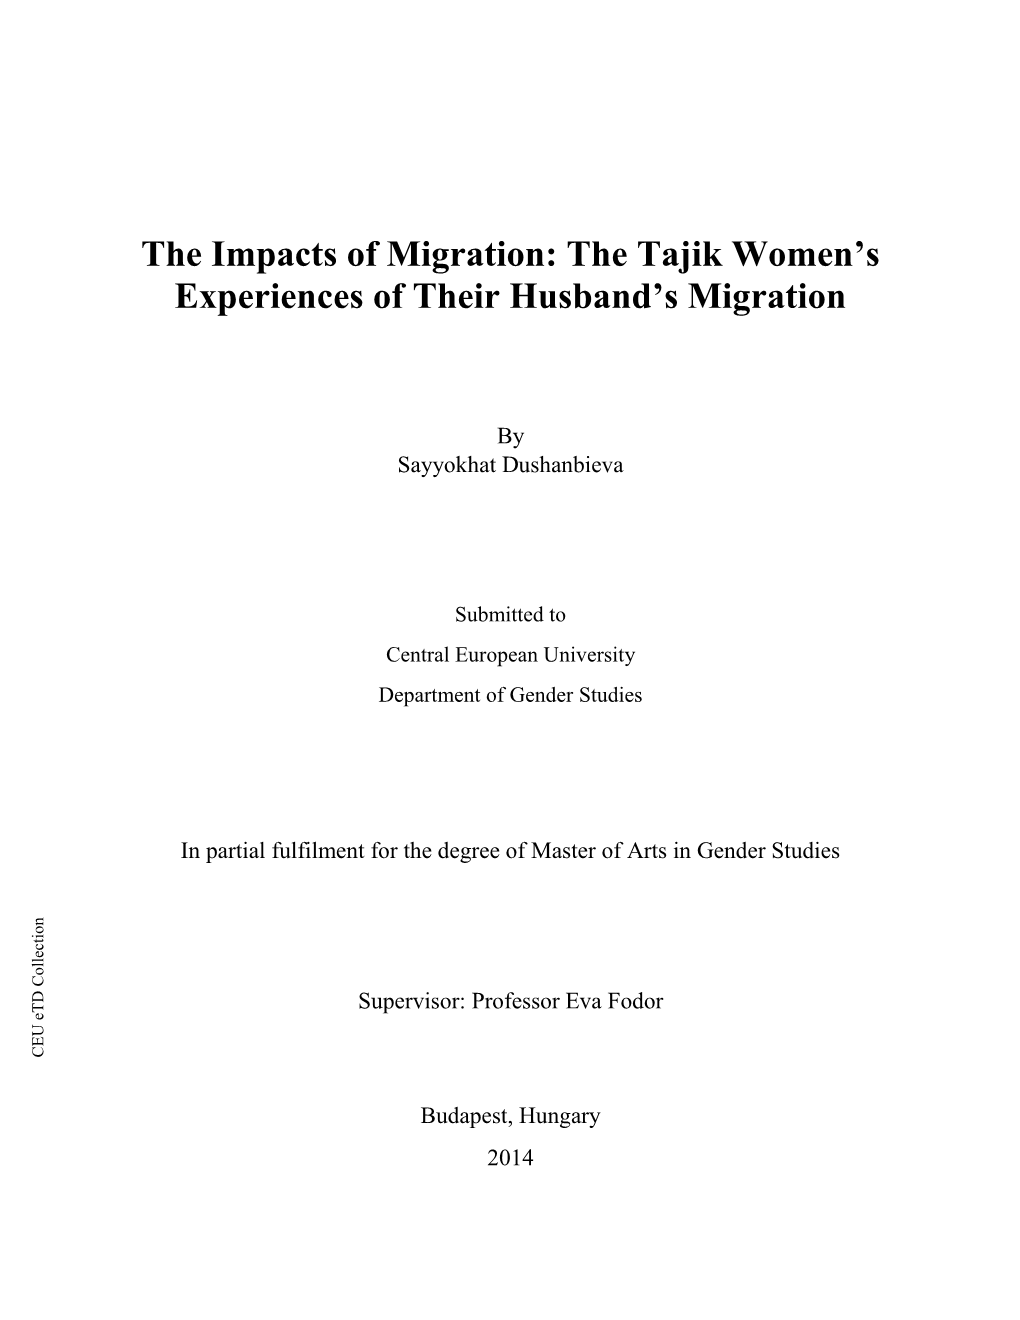 The Tajik Women's Experiences of Their Husband's Migration